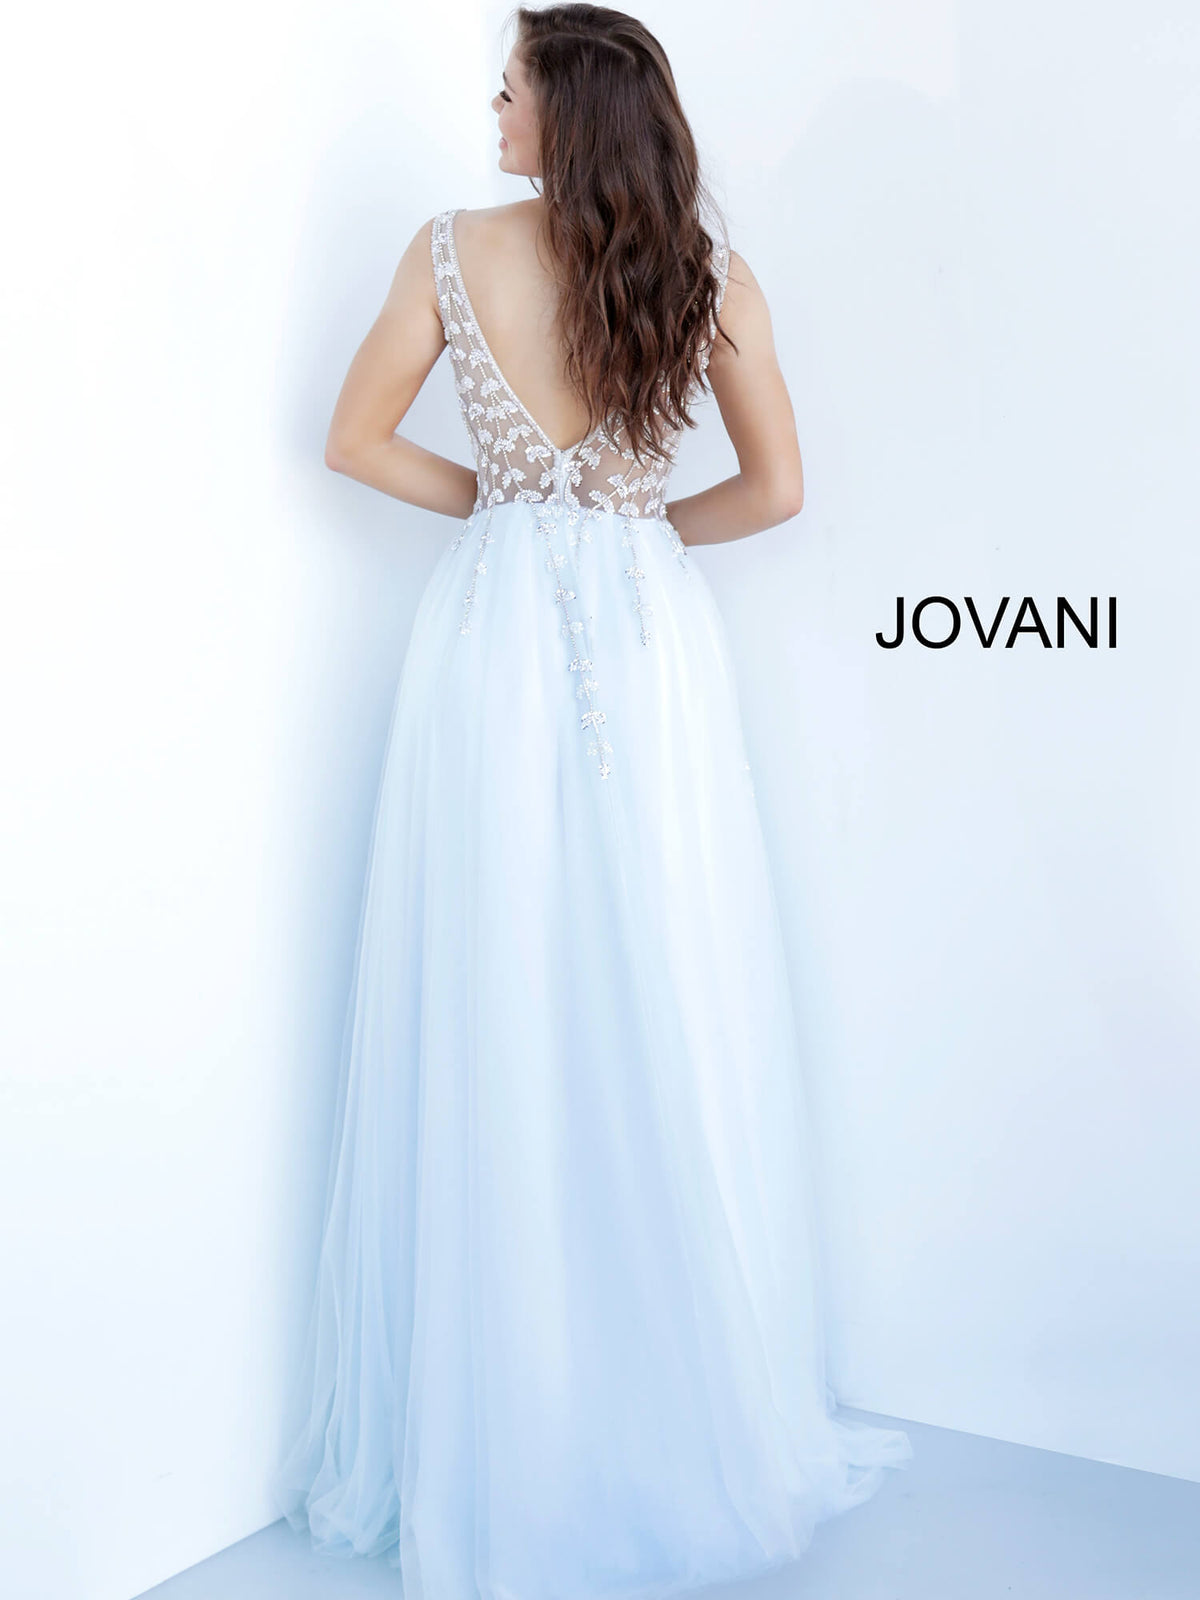 Jovani 3958